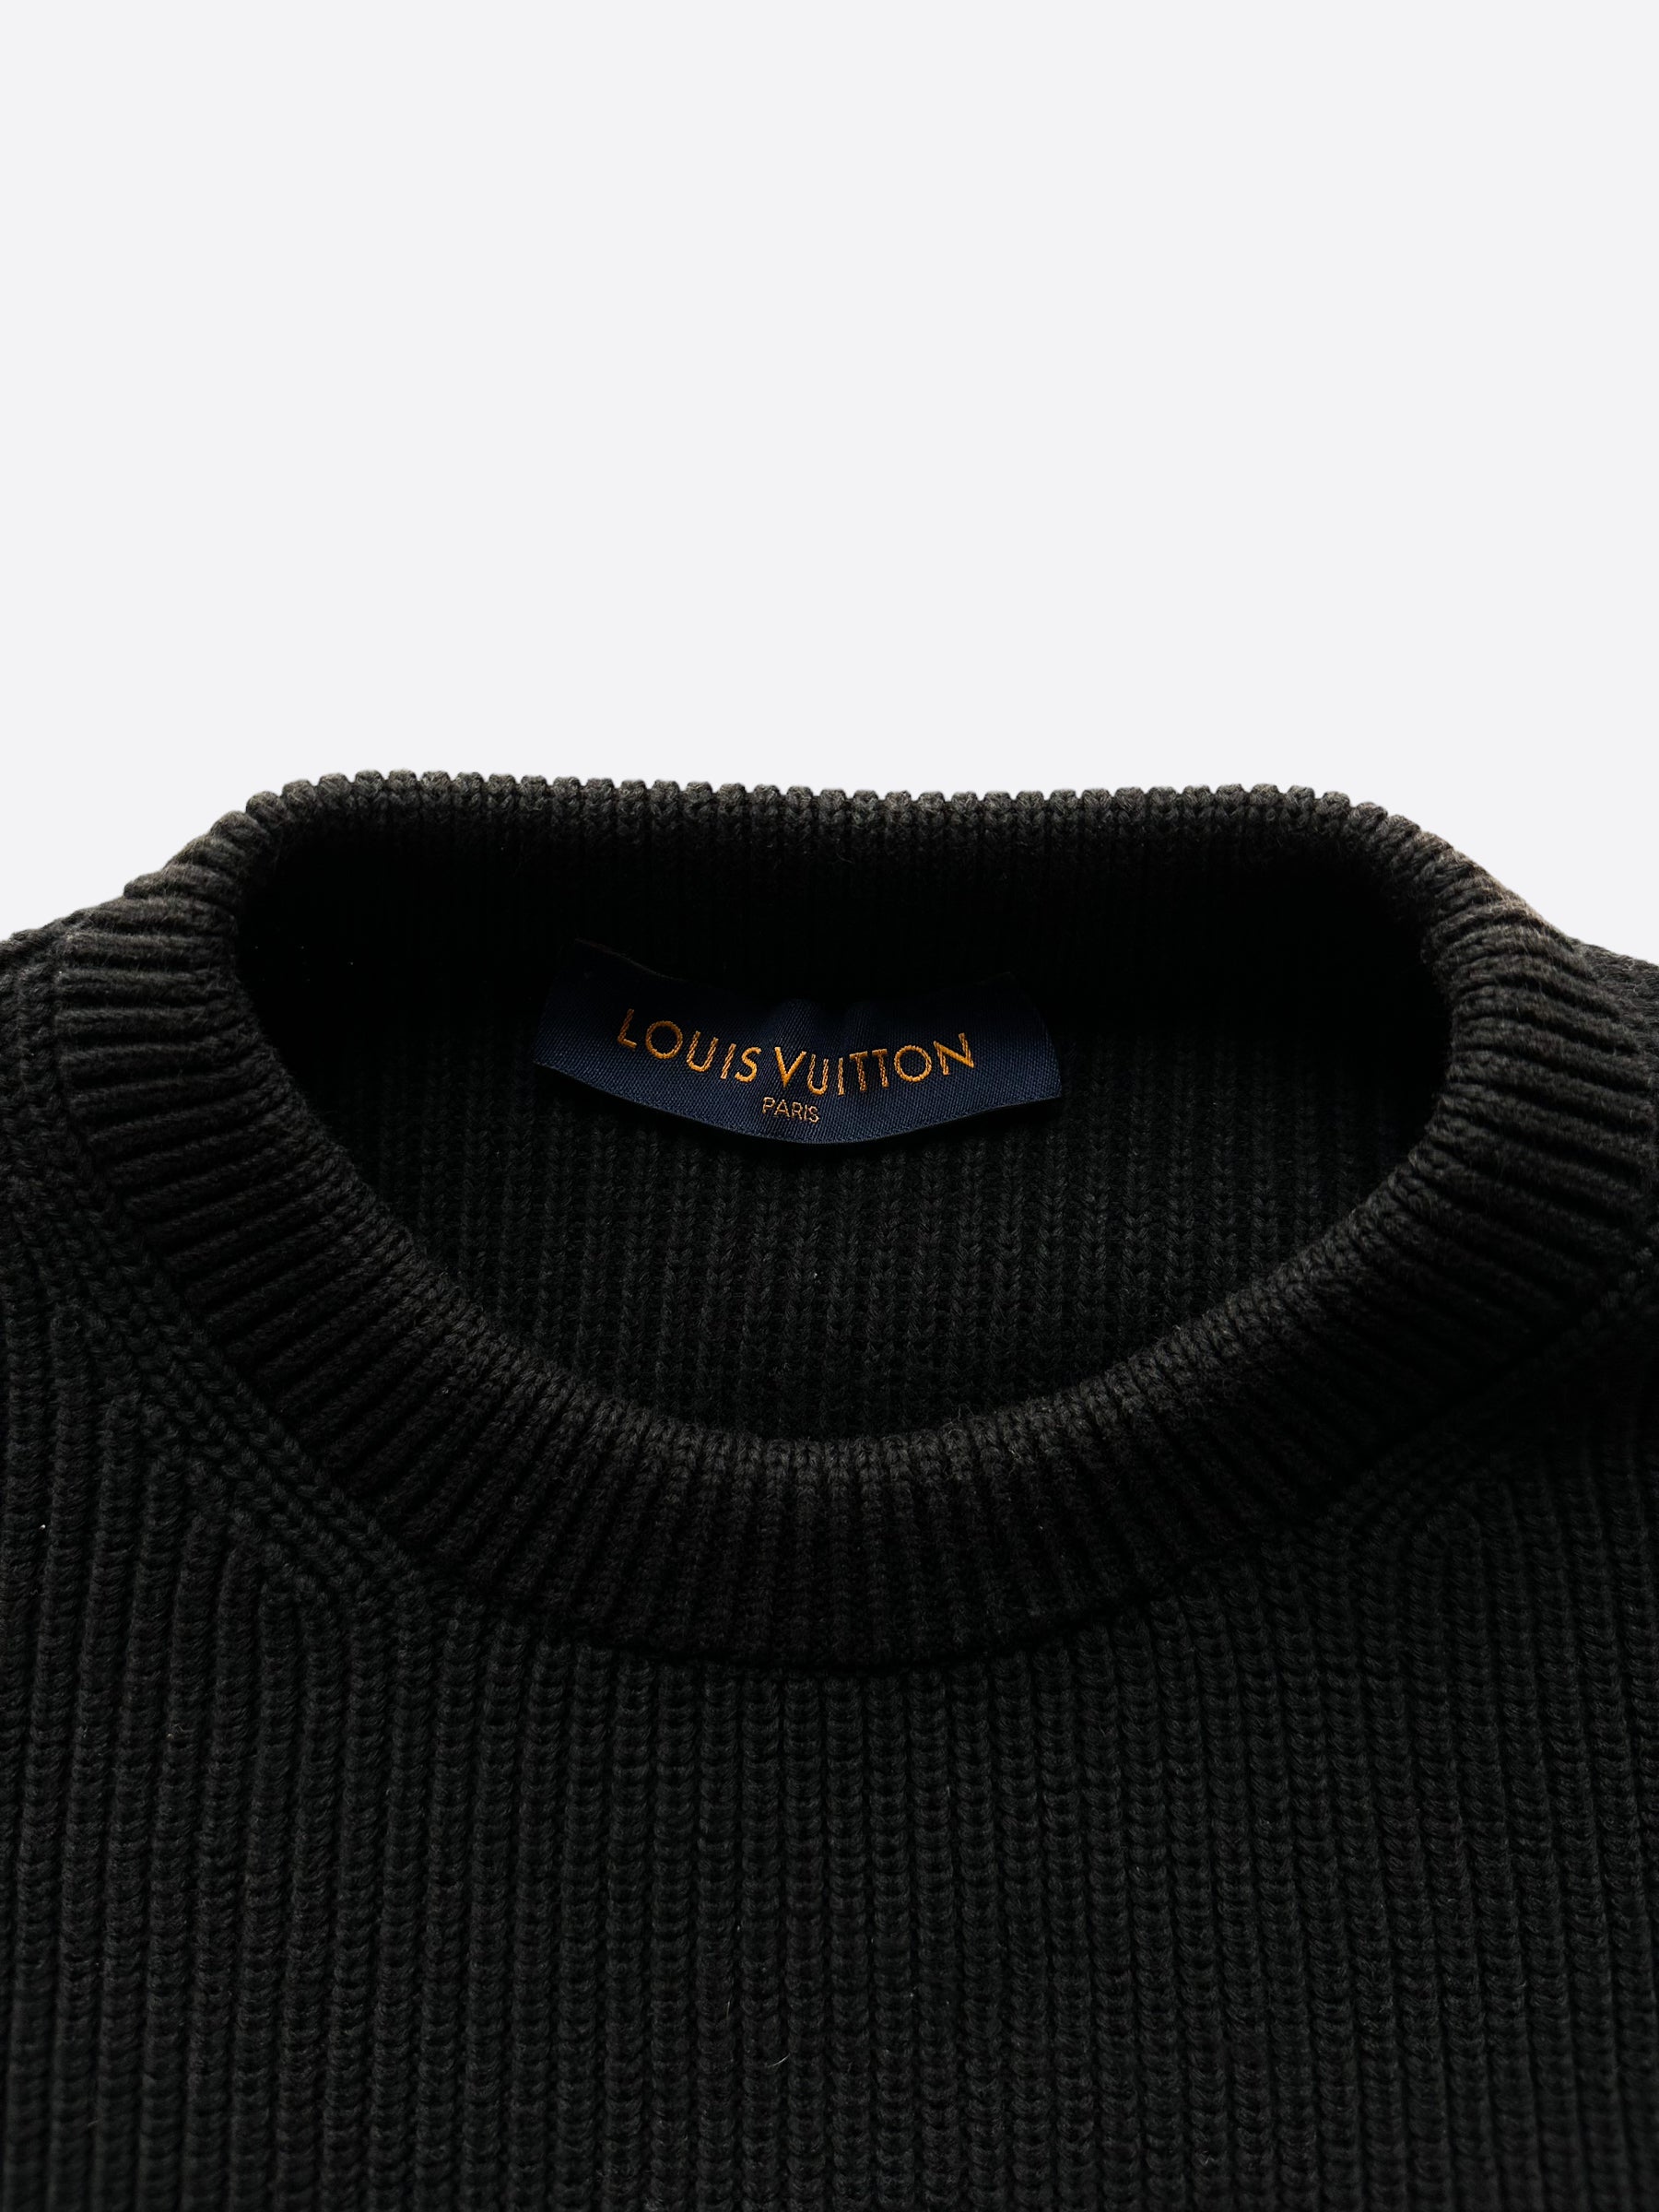 vuitton knit sweater